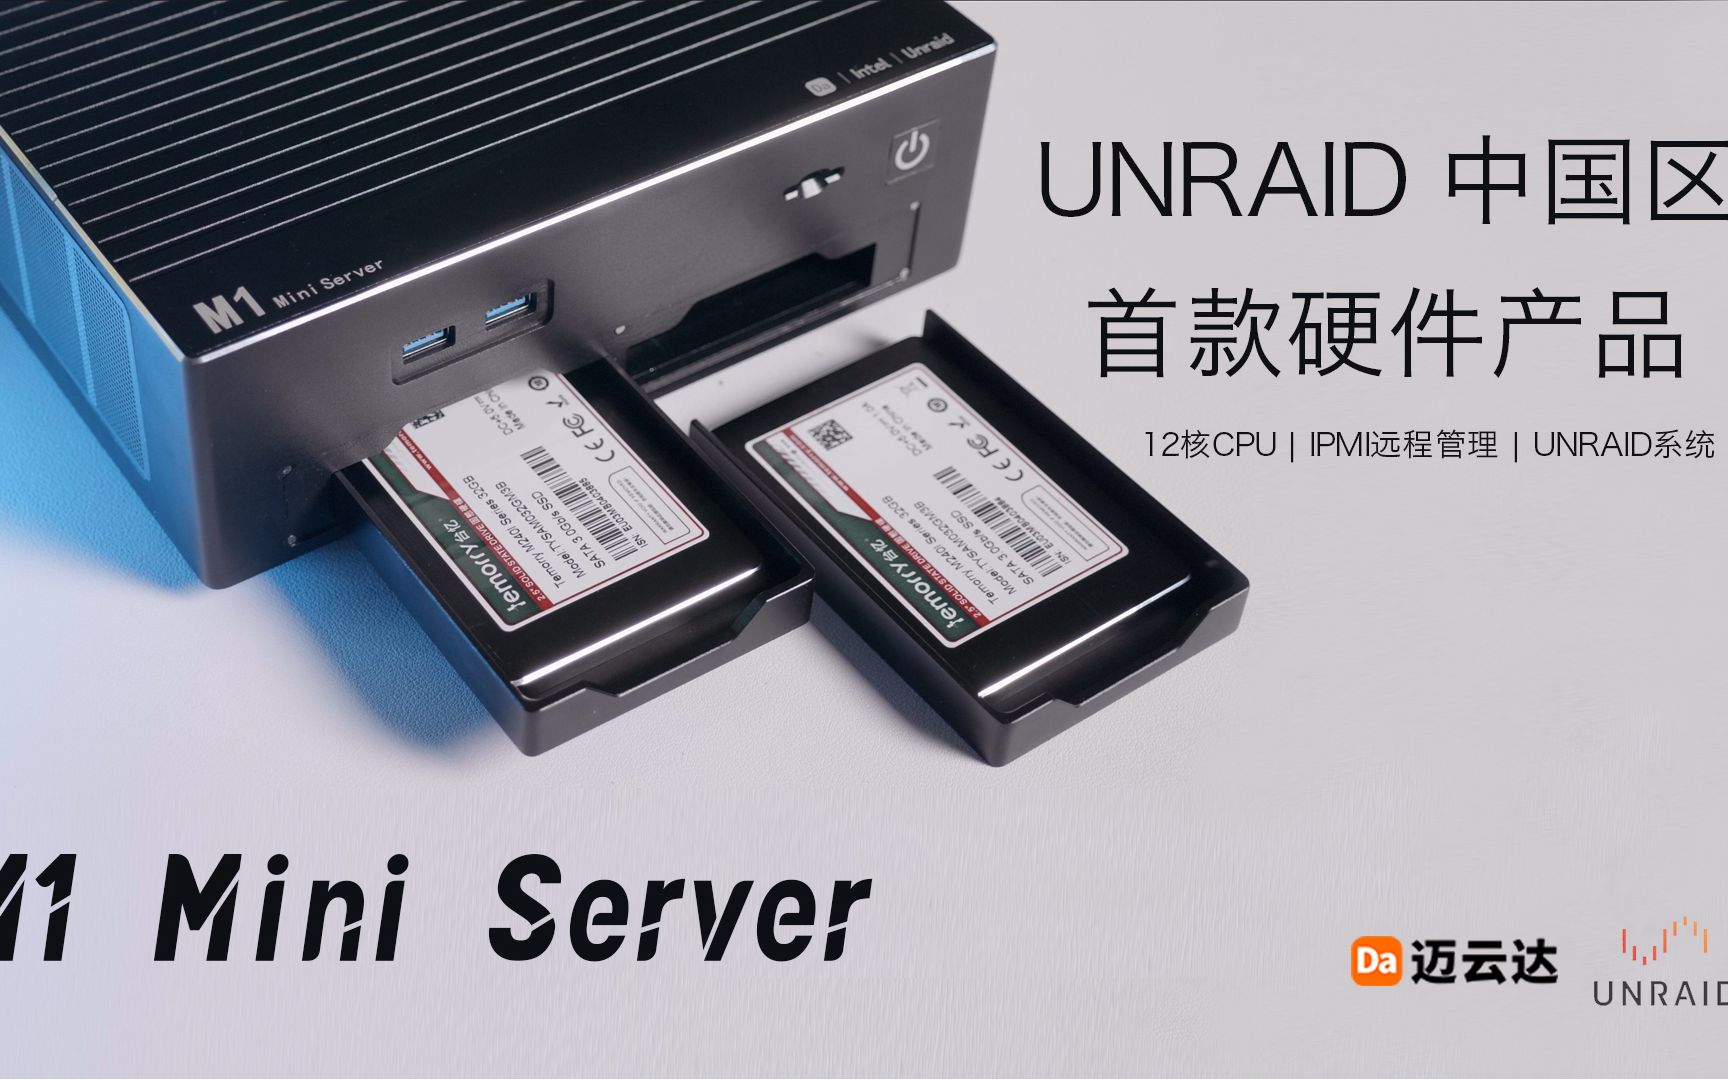 UNRAID中国区首款硬件产品，来自迈云达公司的天花板级产品M1 mini server，原生搭载UNRAID PLUS系统，支持IPMI远程管理。